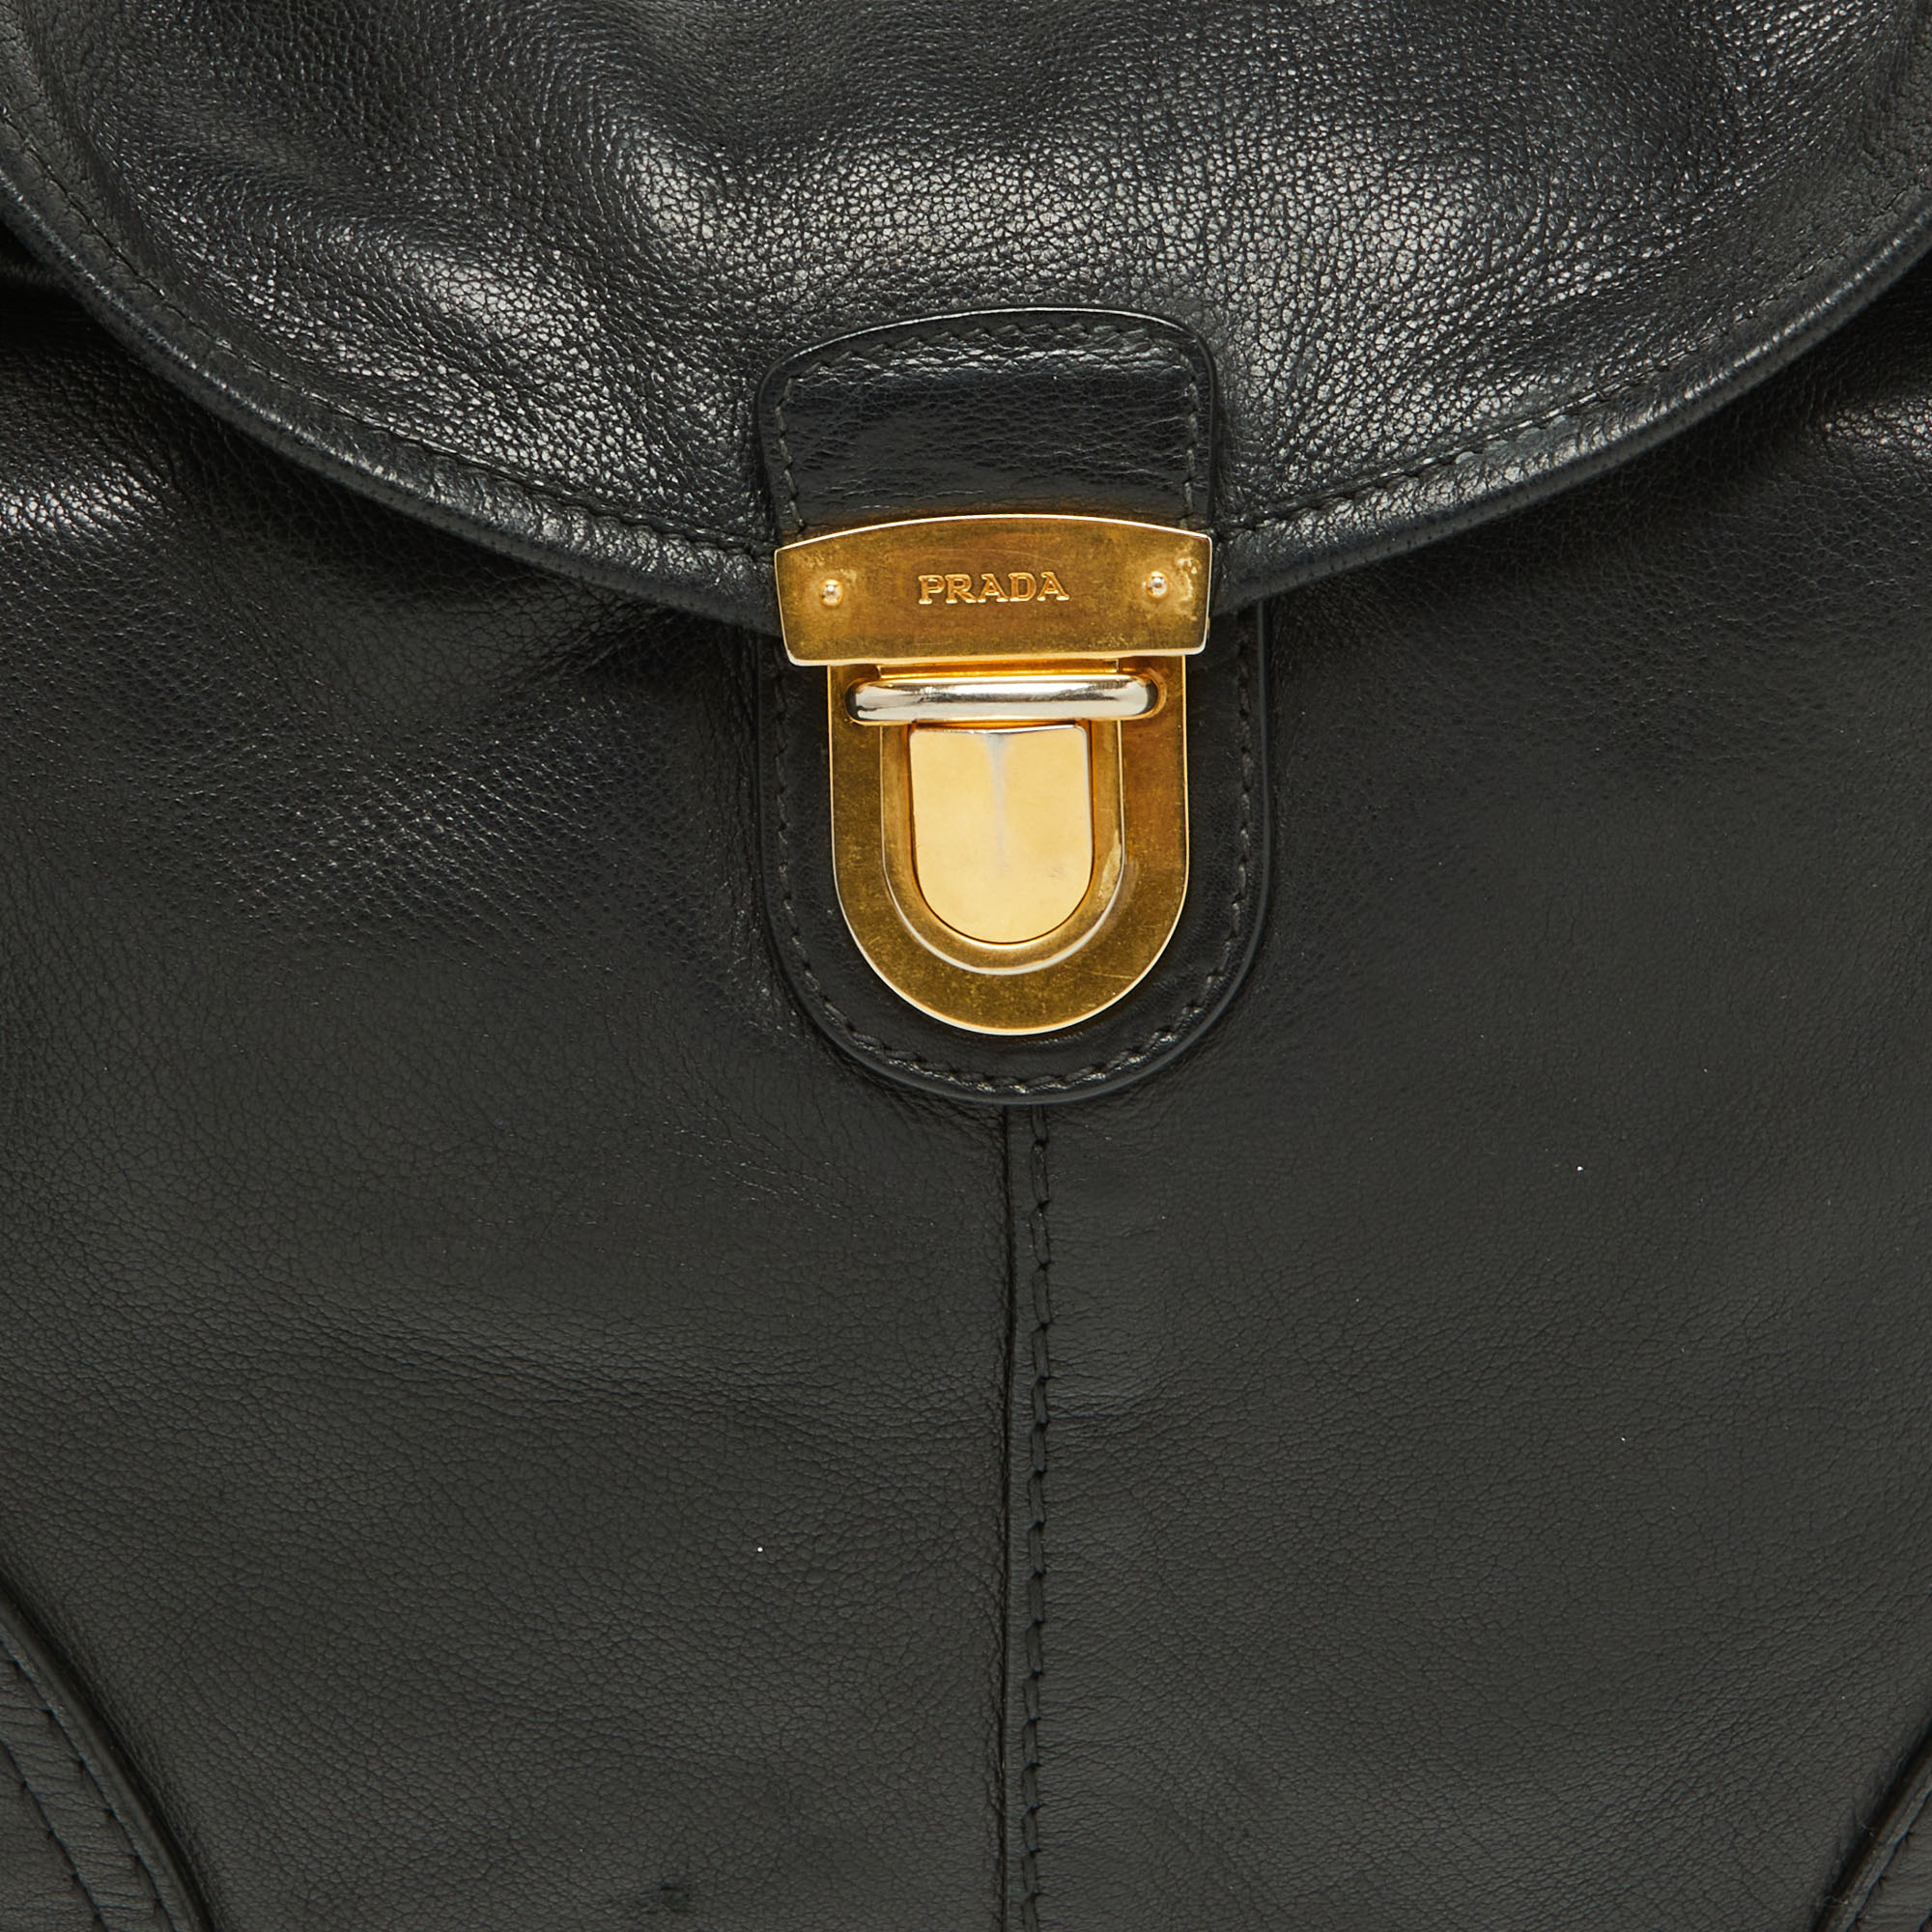 Prada Black Soft Leather Pushlock Flap Hobo